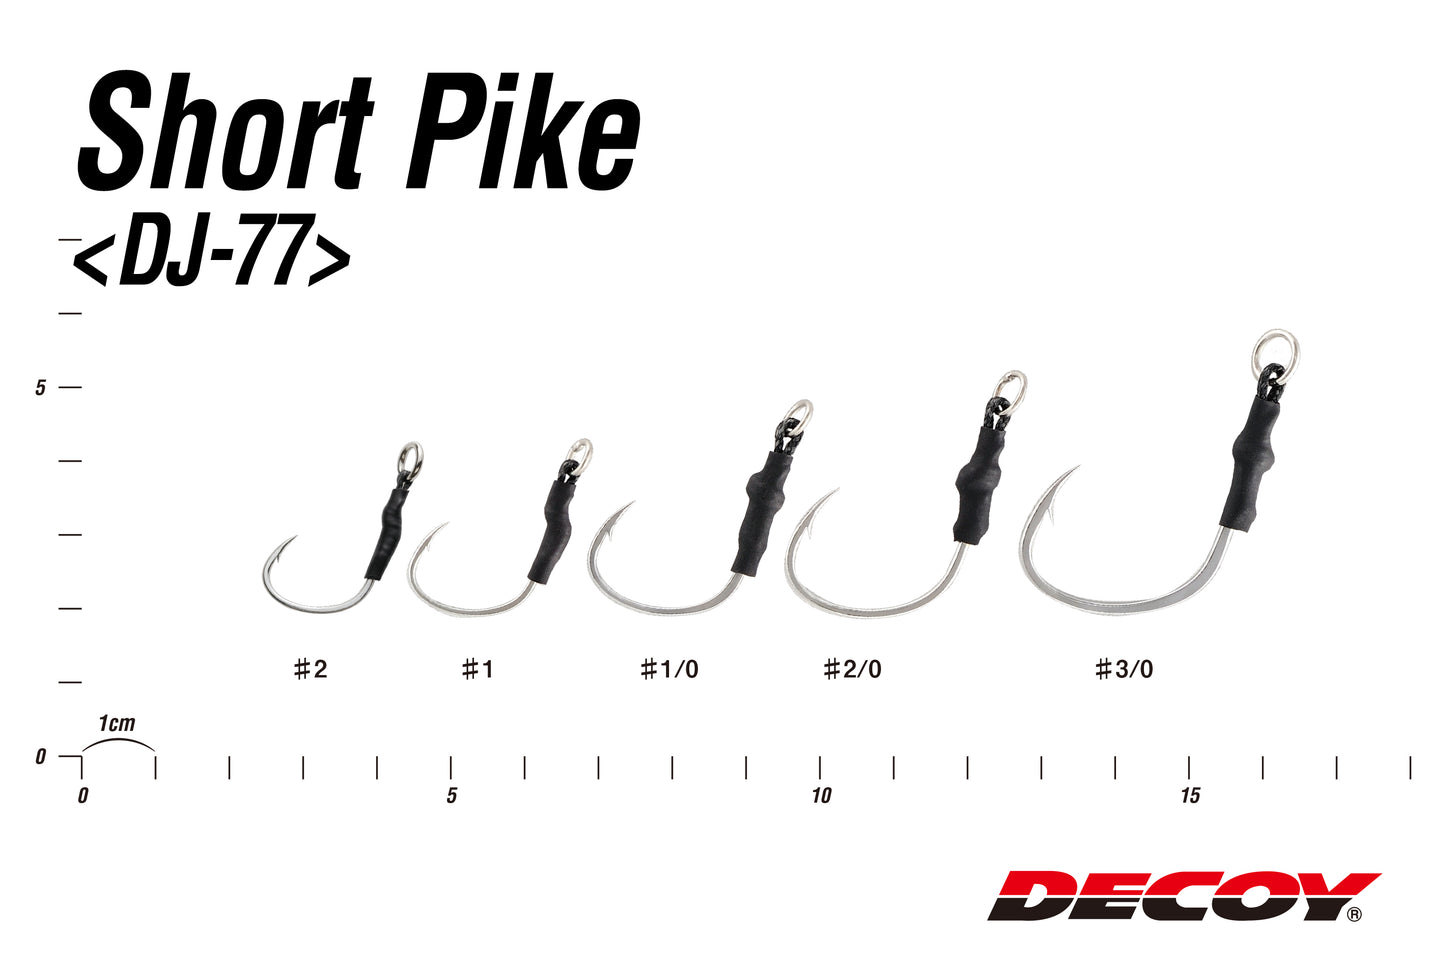 Decoy Short Pike (DJ-77)